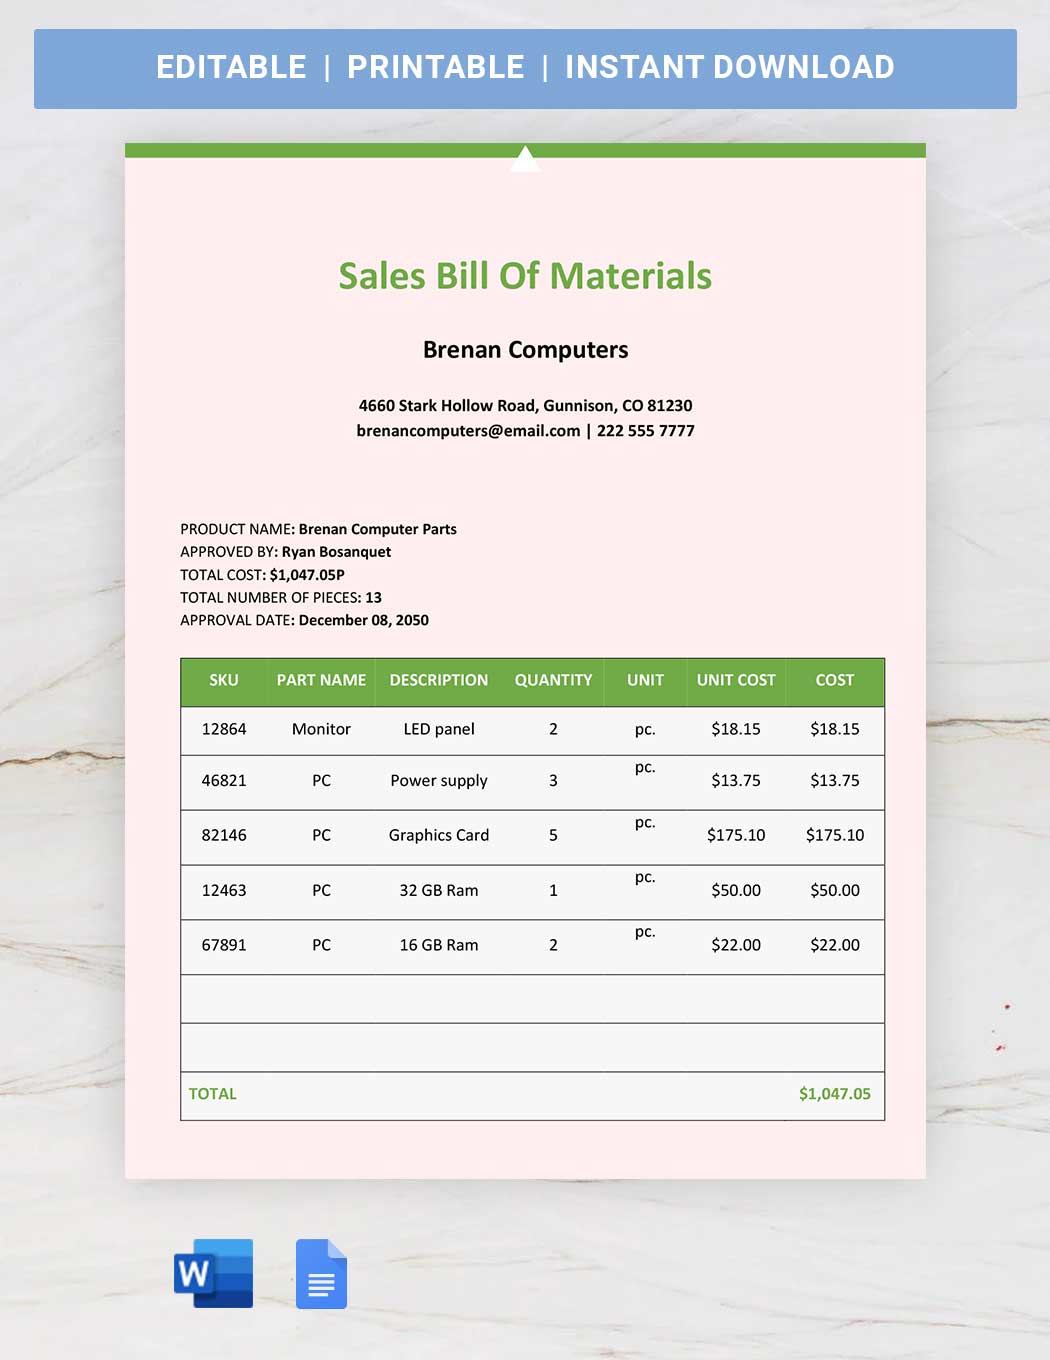 Sales Bill Of Materials Template